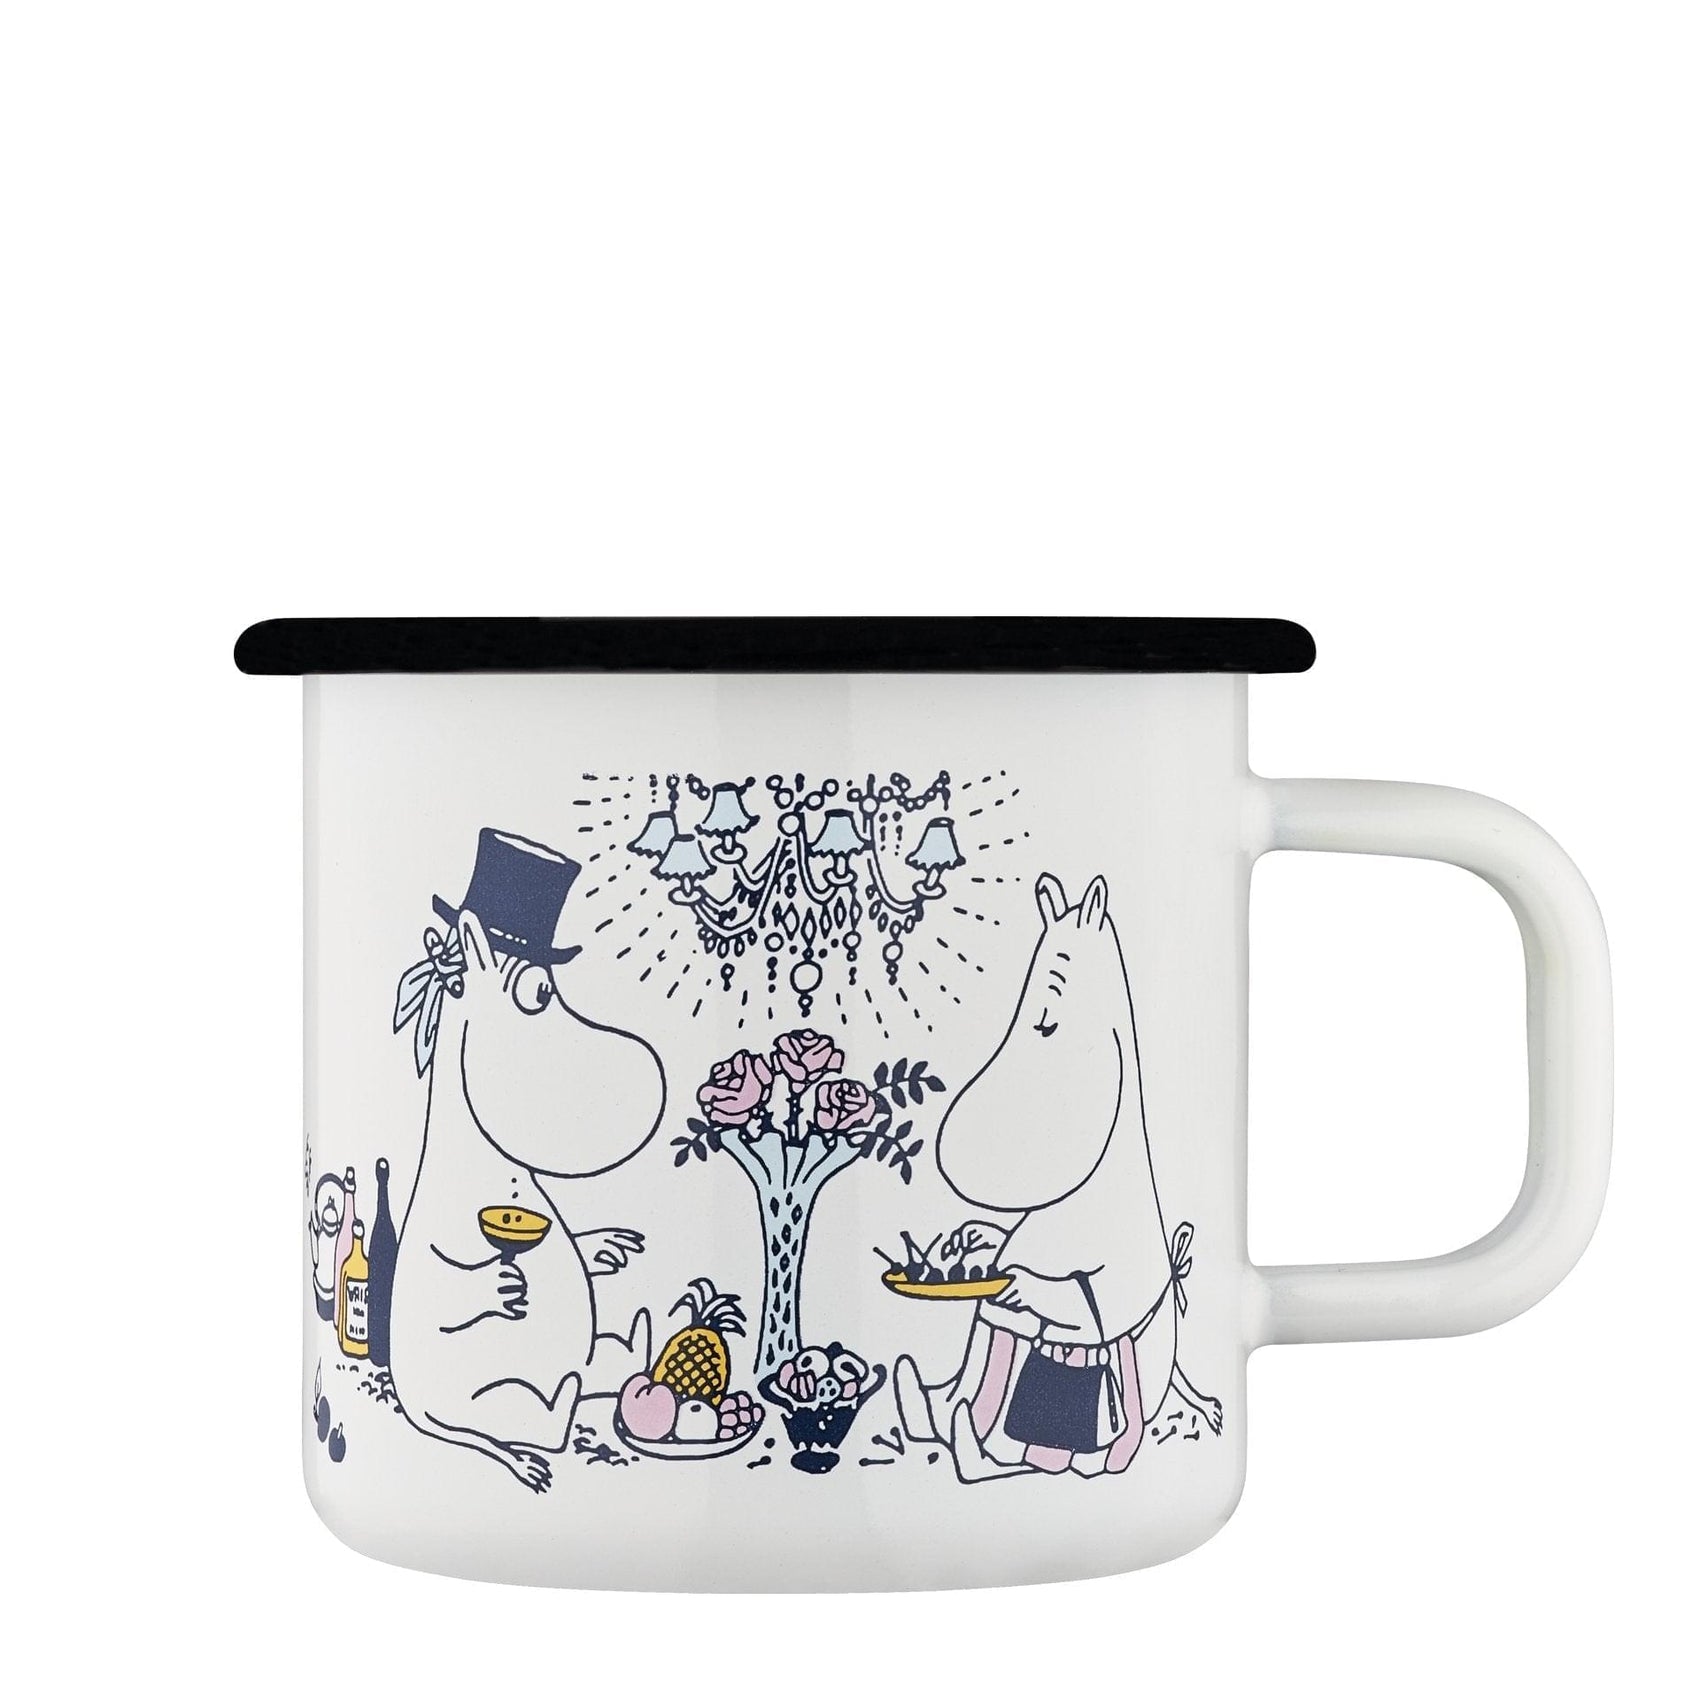 The Moomins enamel mug 3.7dl Date Night